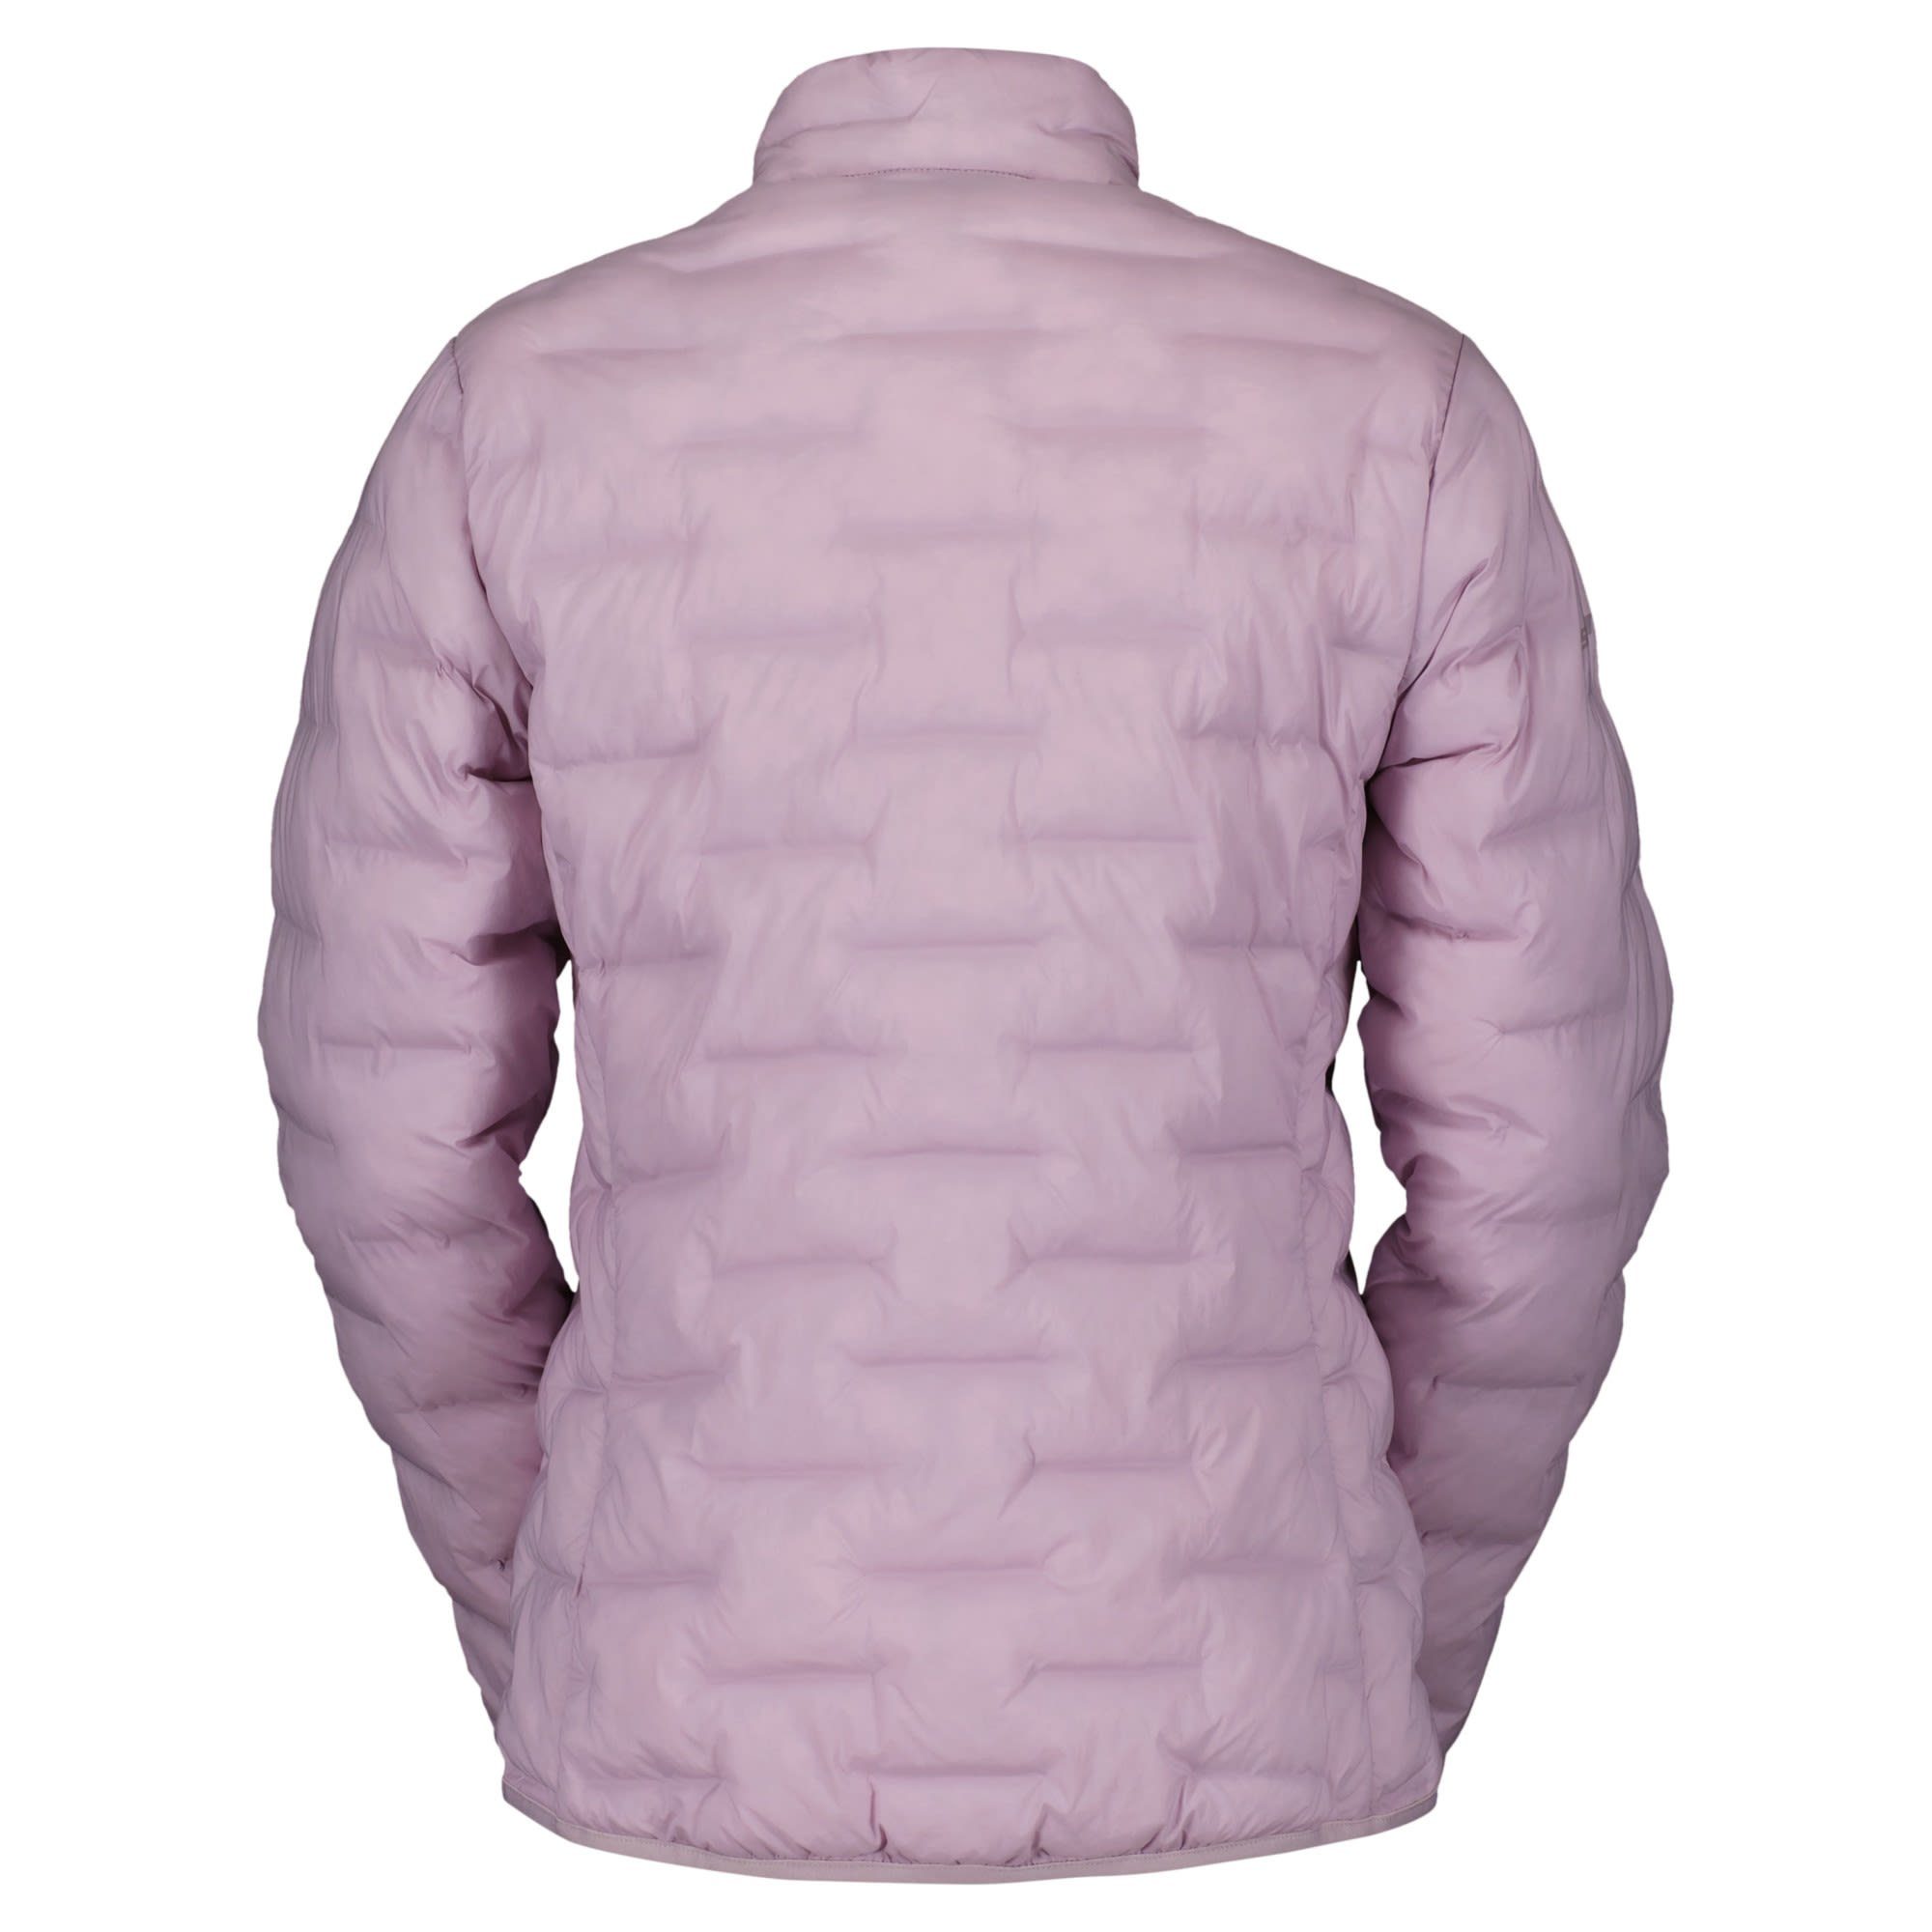 Scott Scott Anorak Anorak Cloud Insuloft Pink Jacket W Stretch Damen